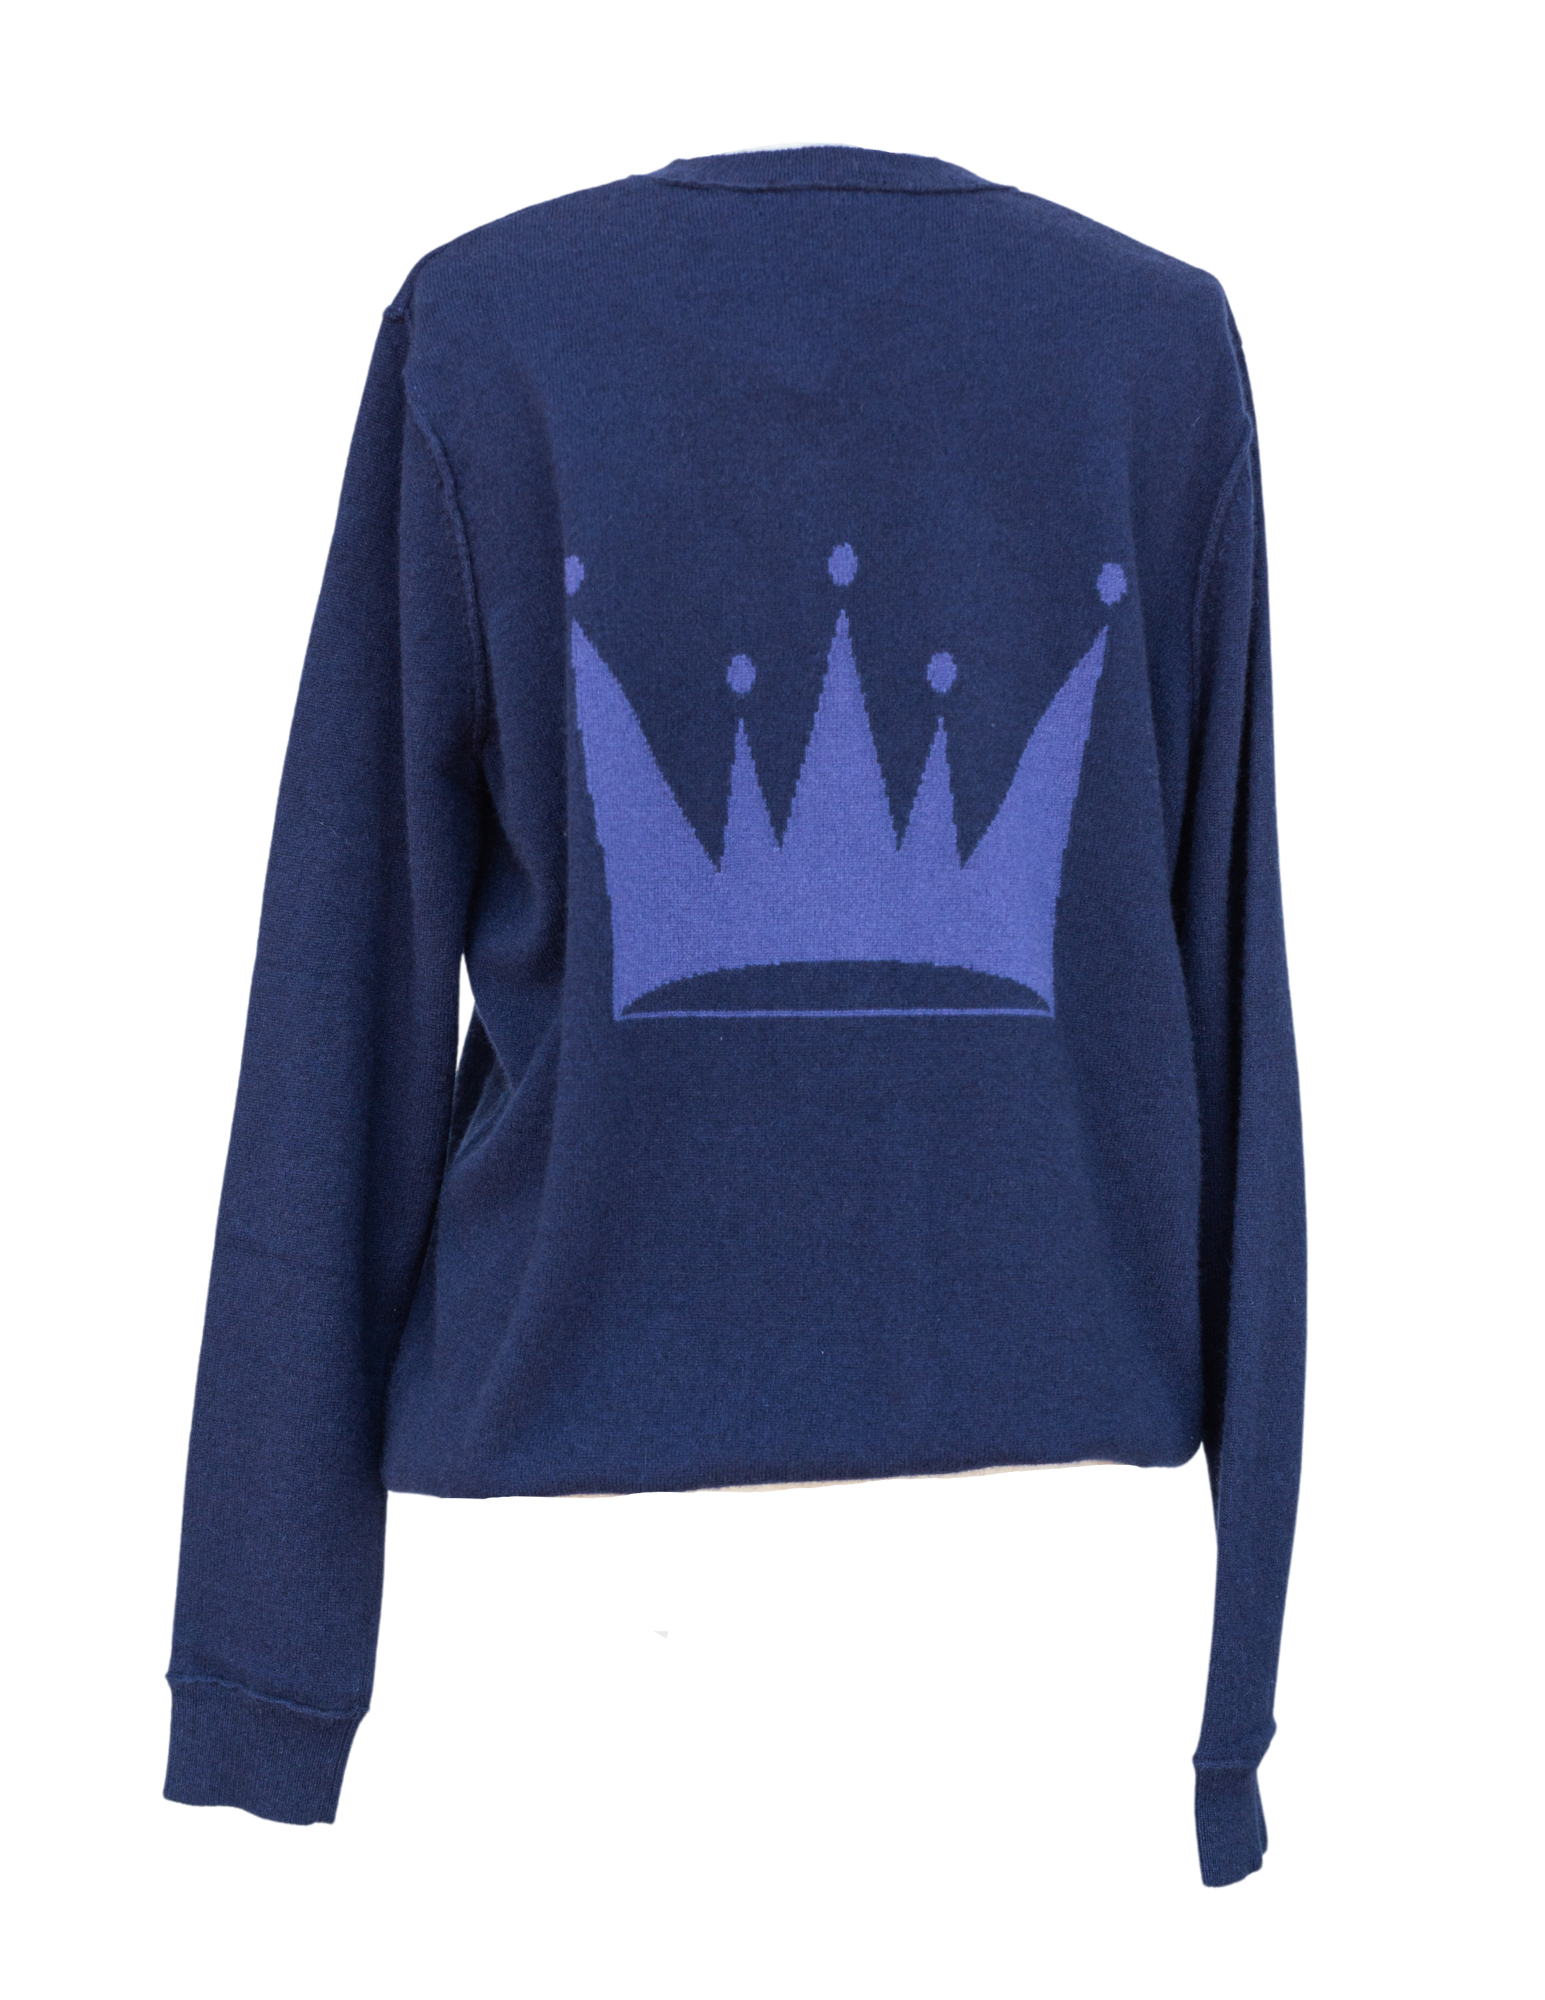 New Crown Sweater - Regal